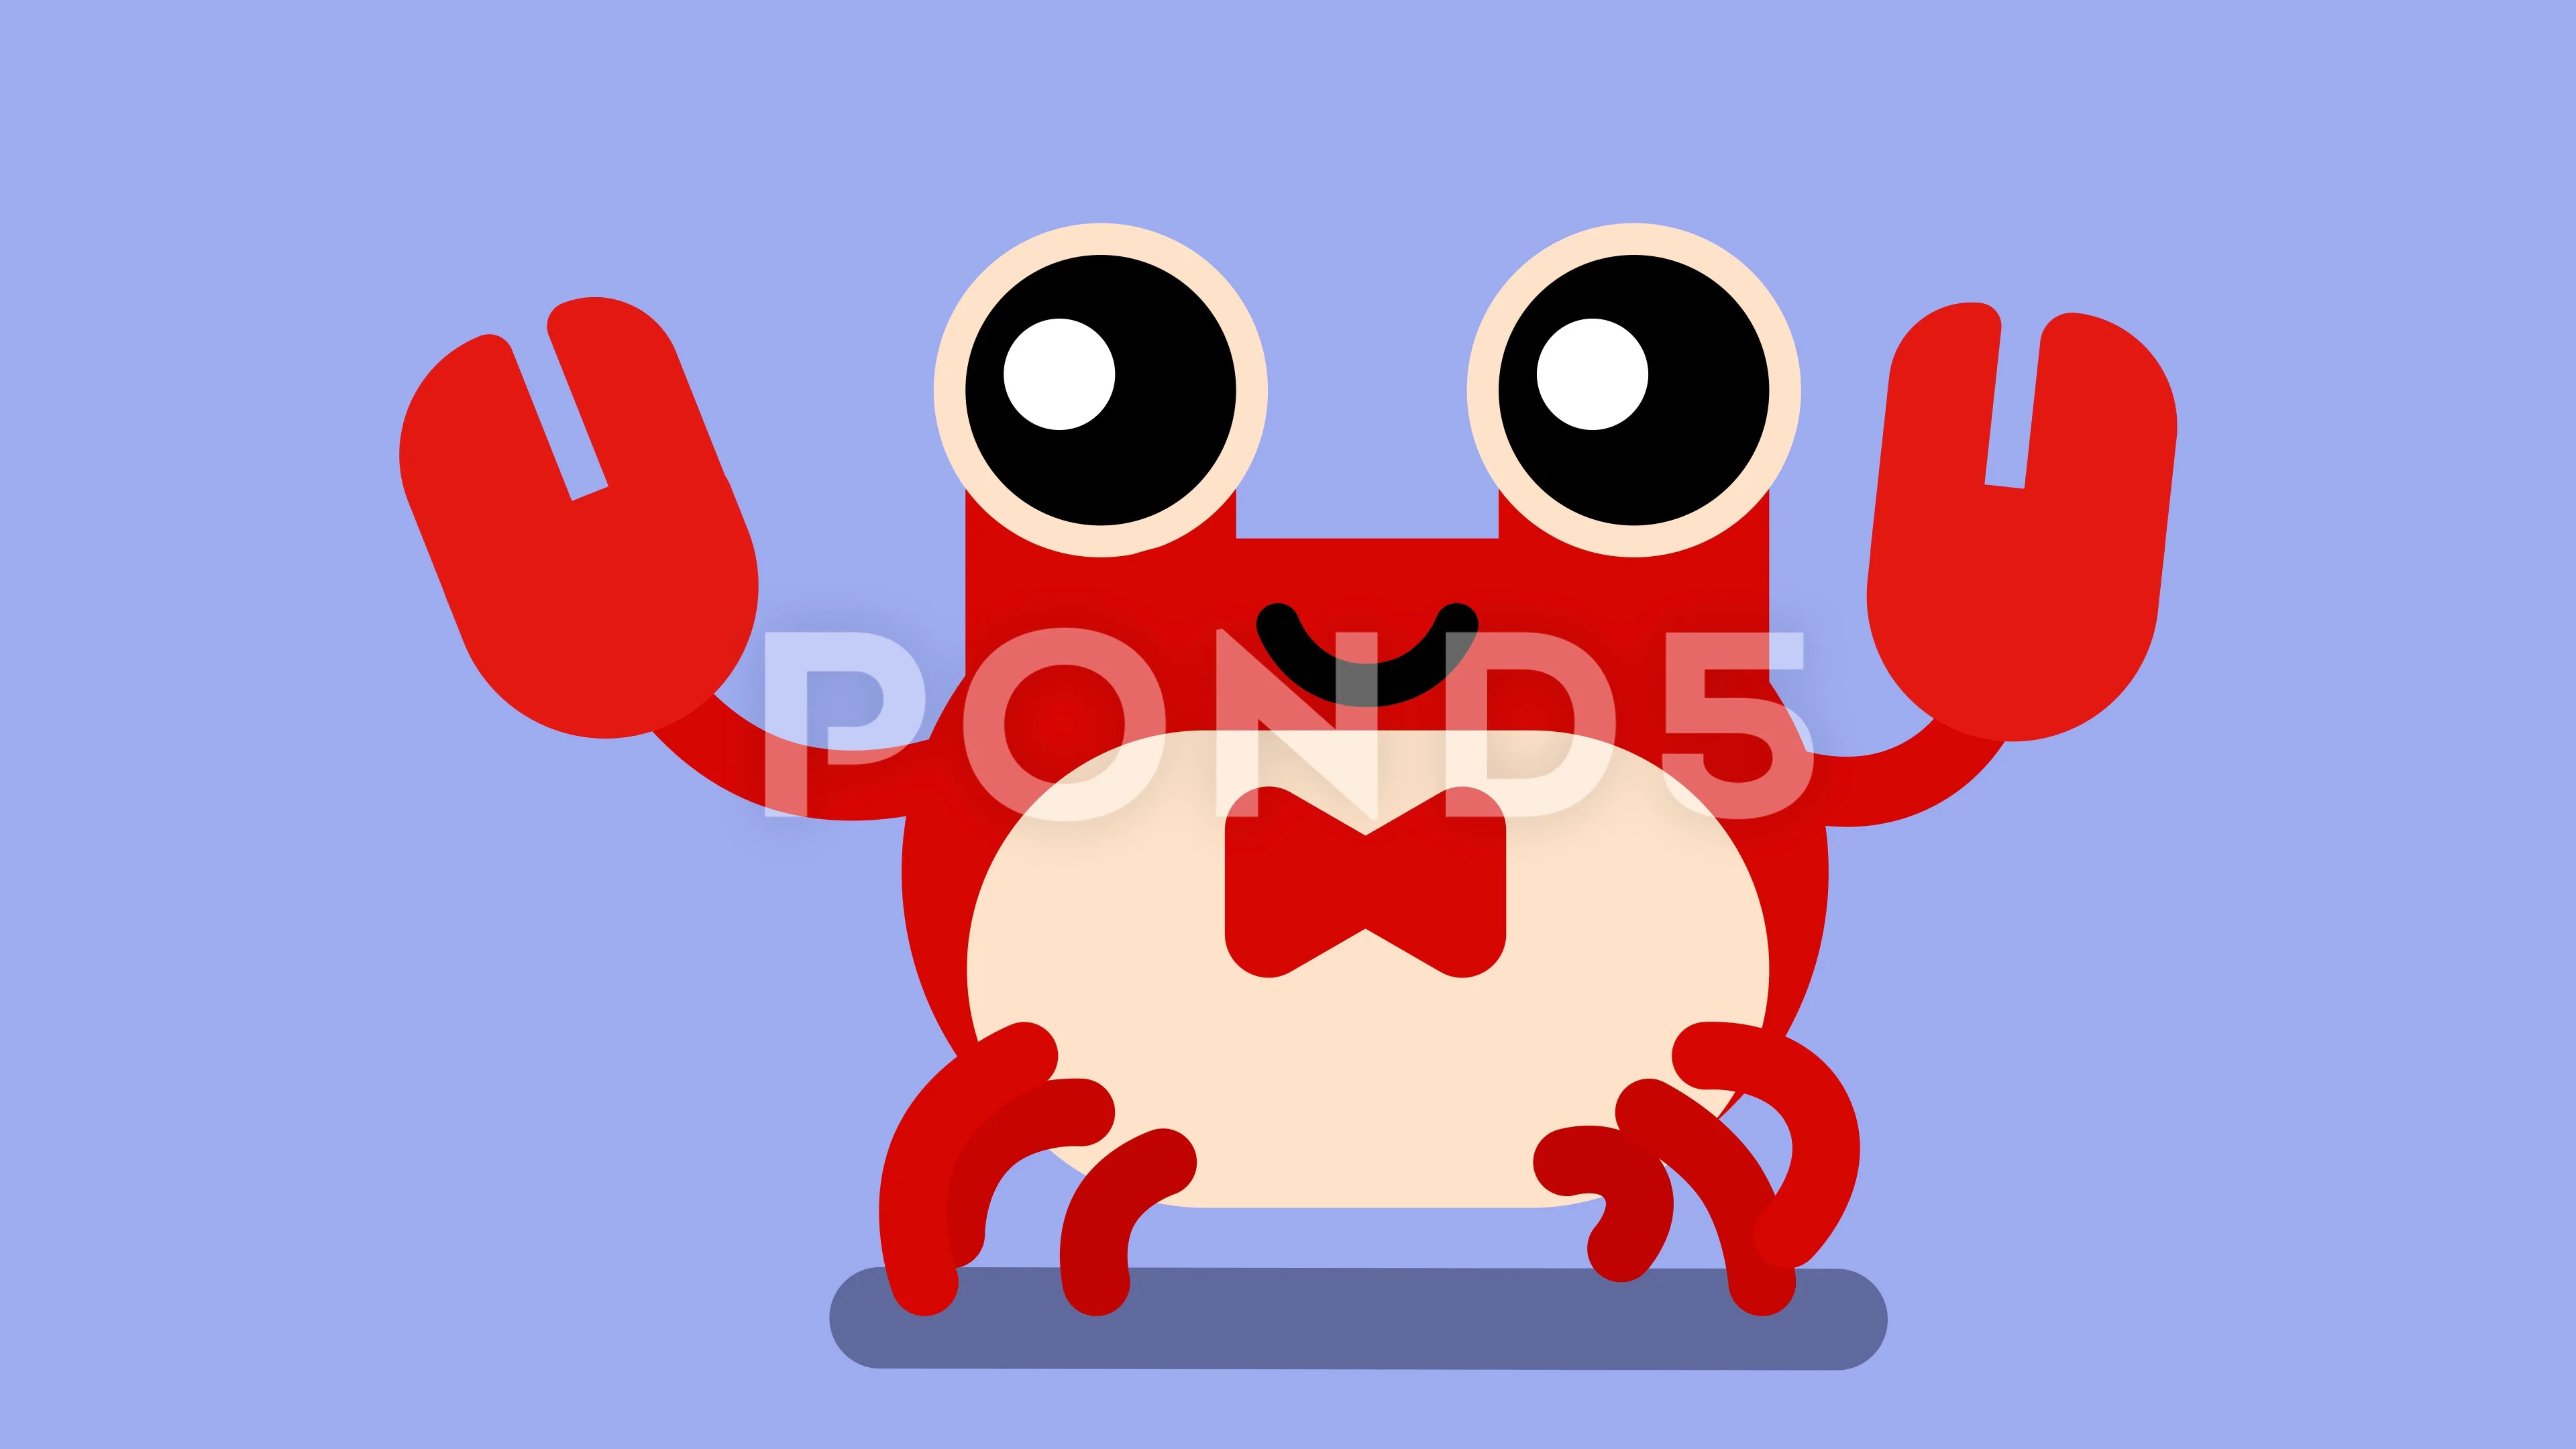 cute baby cartoon crab